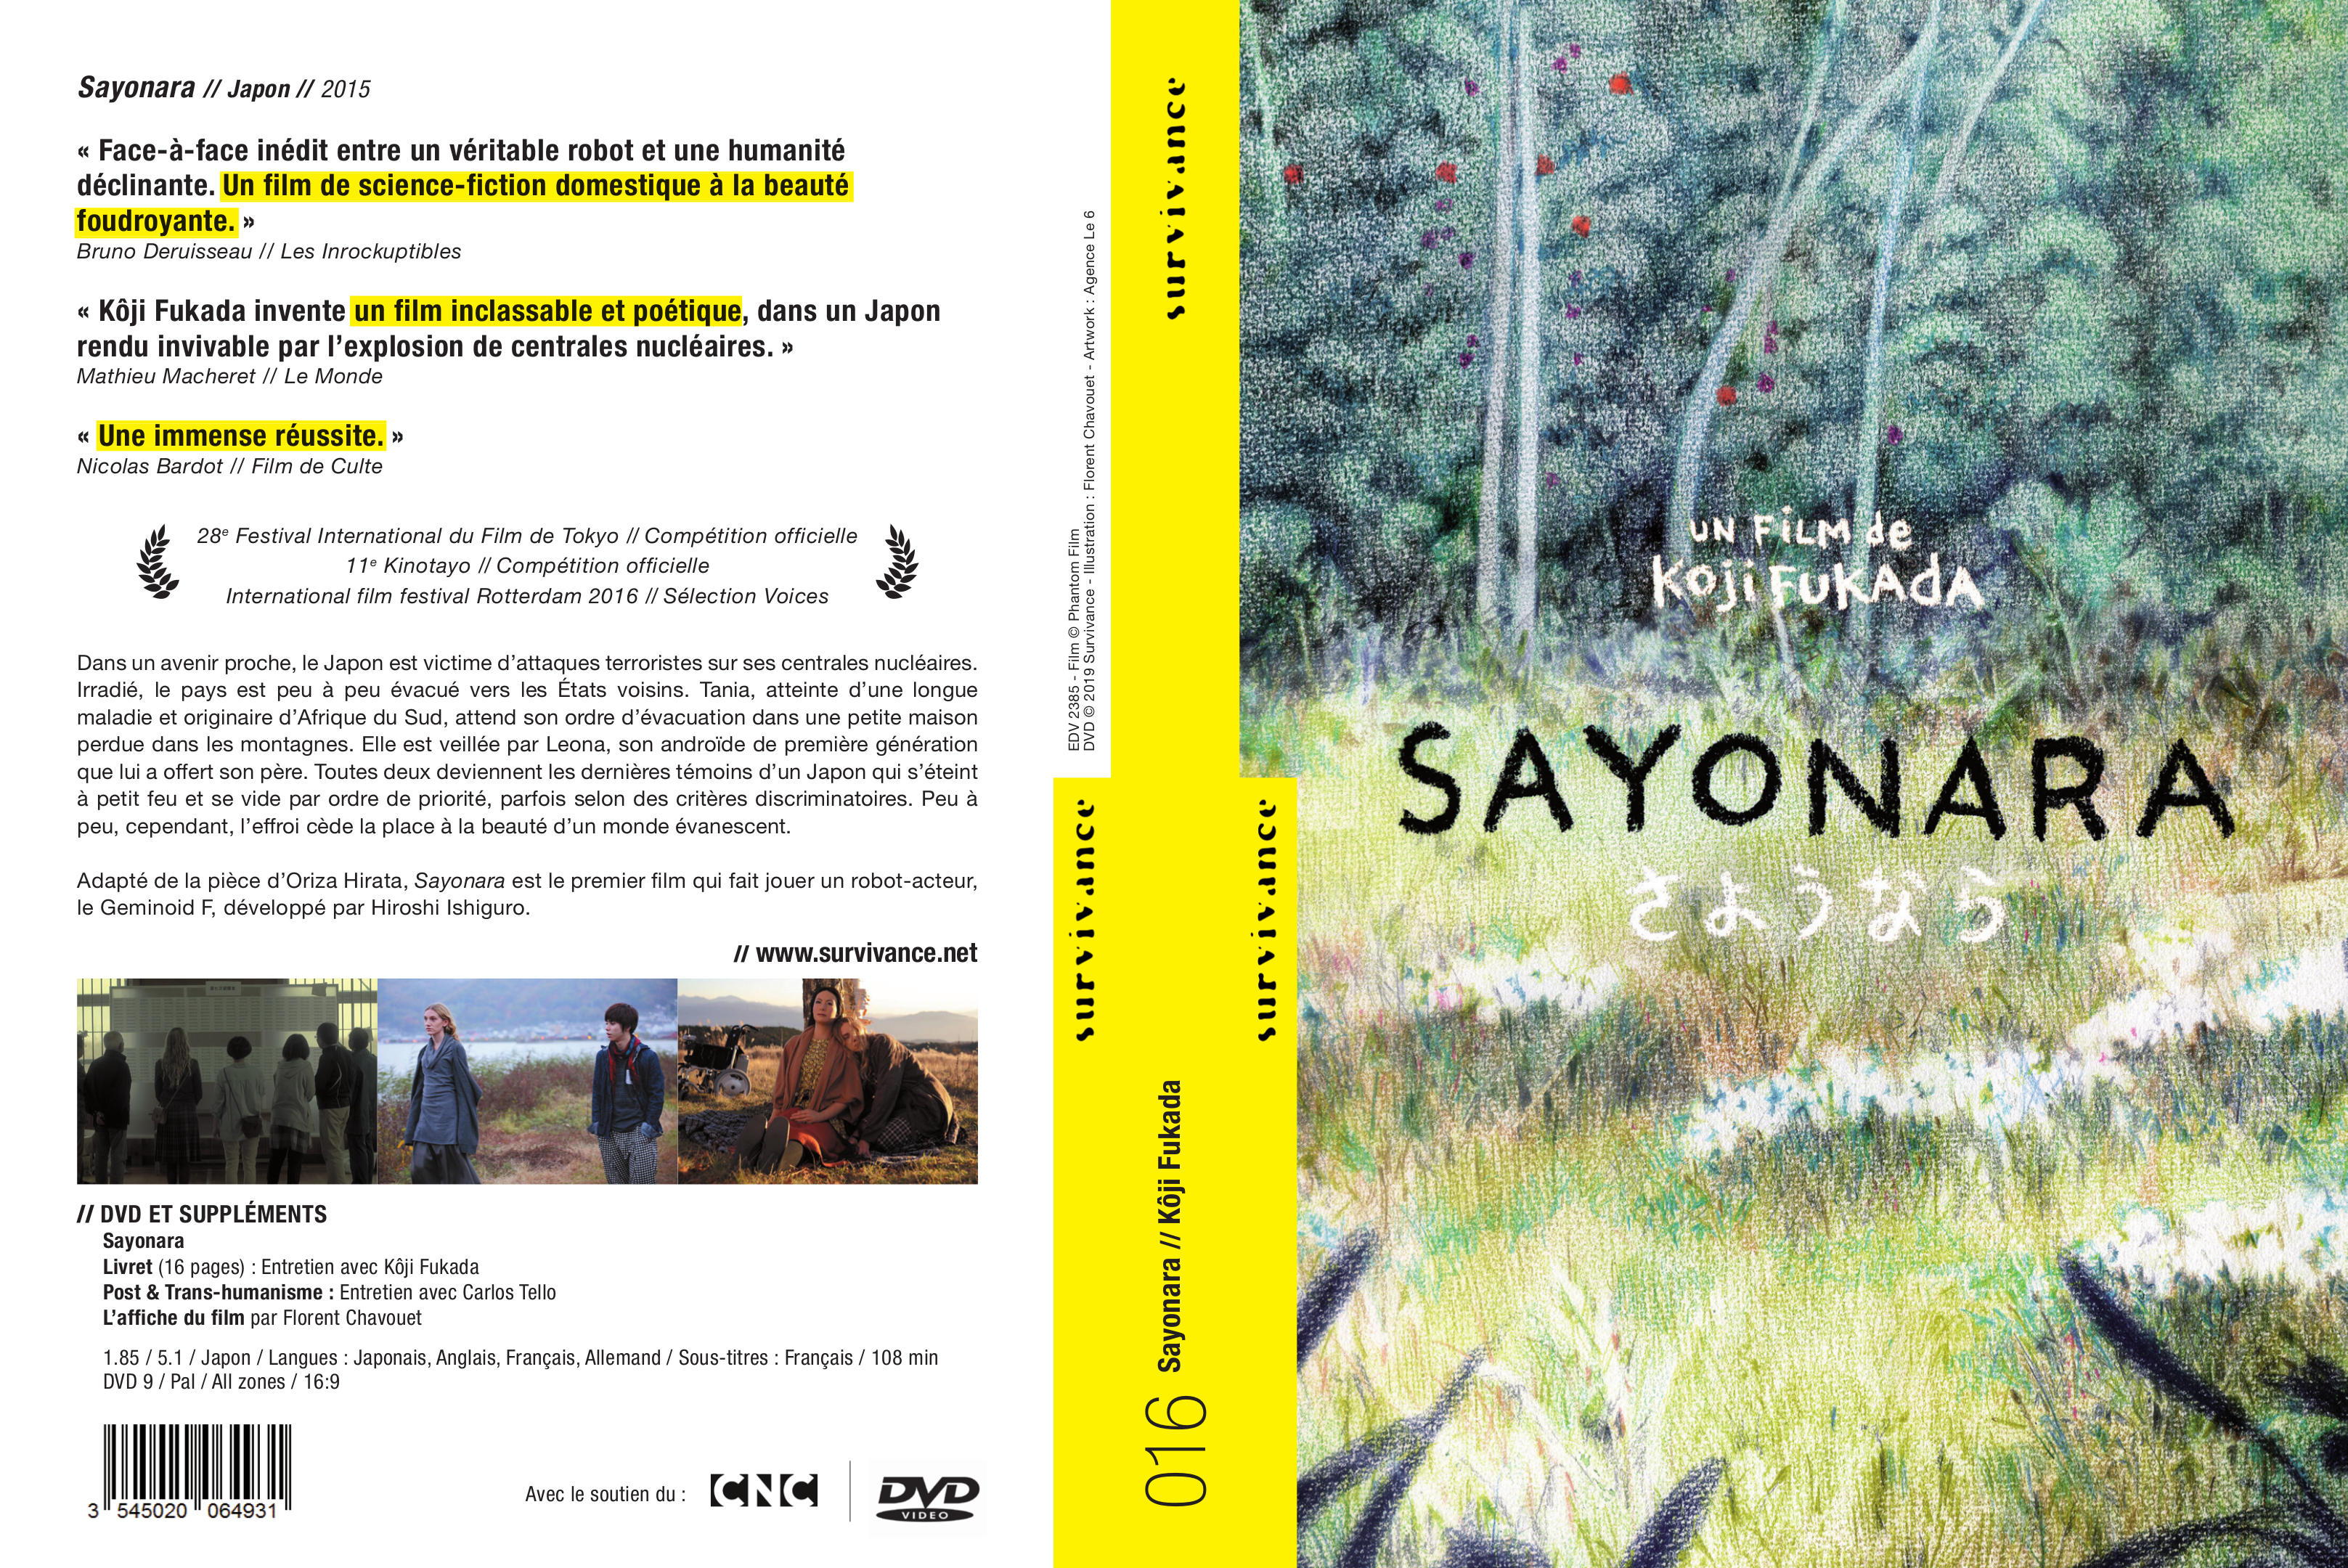 Jaquette DVD Sayonara (2015)